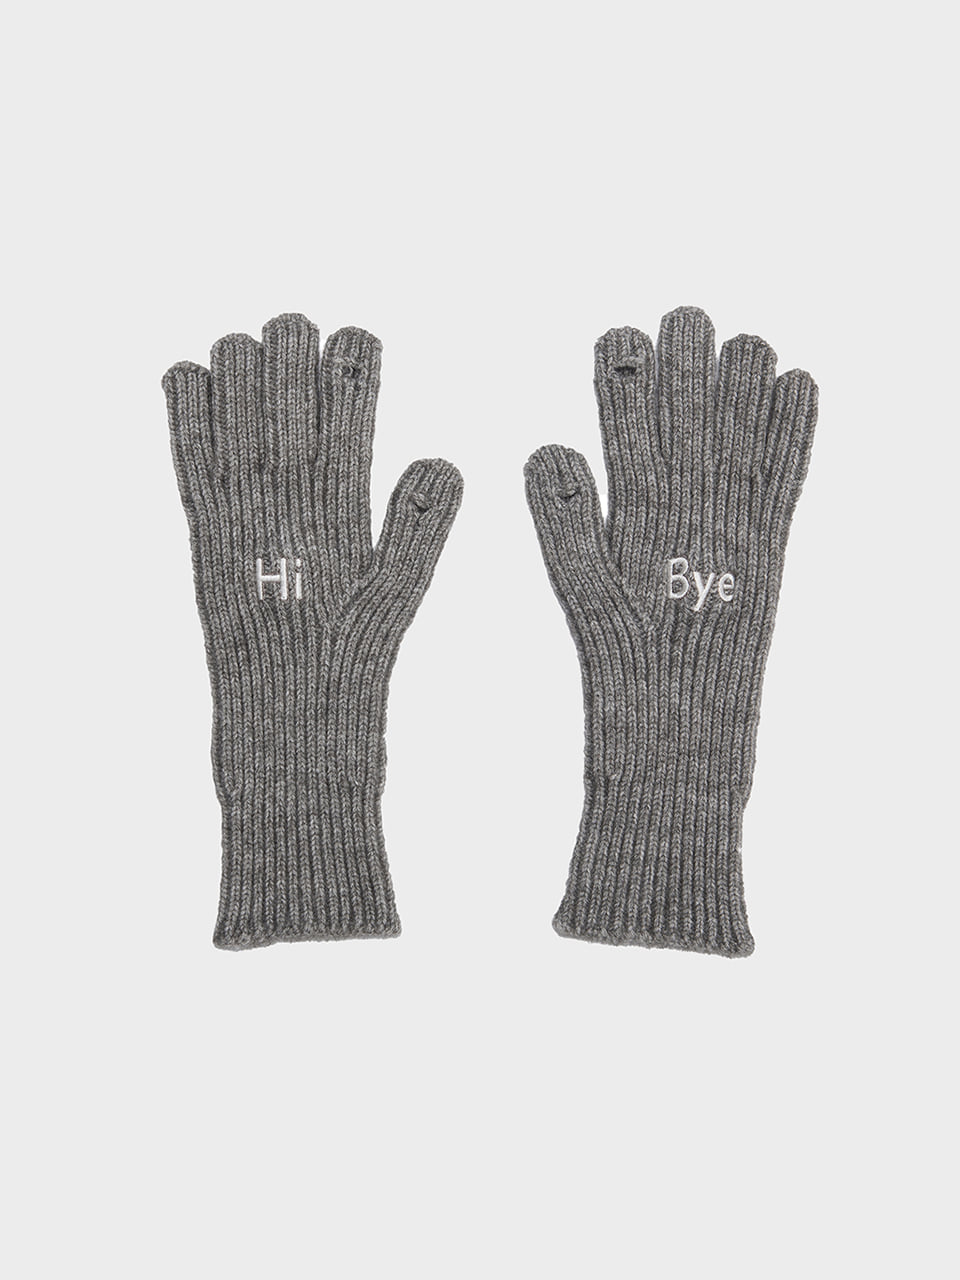 [gift] hi bye gloves - charcoalBRENDA BRENDEN